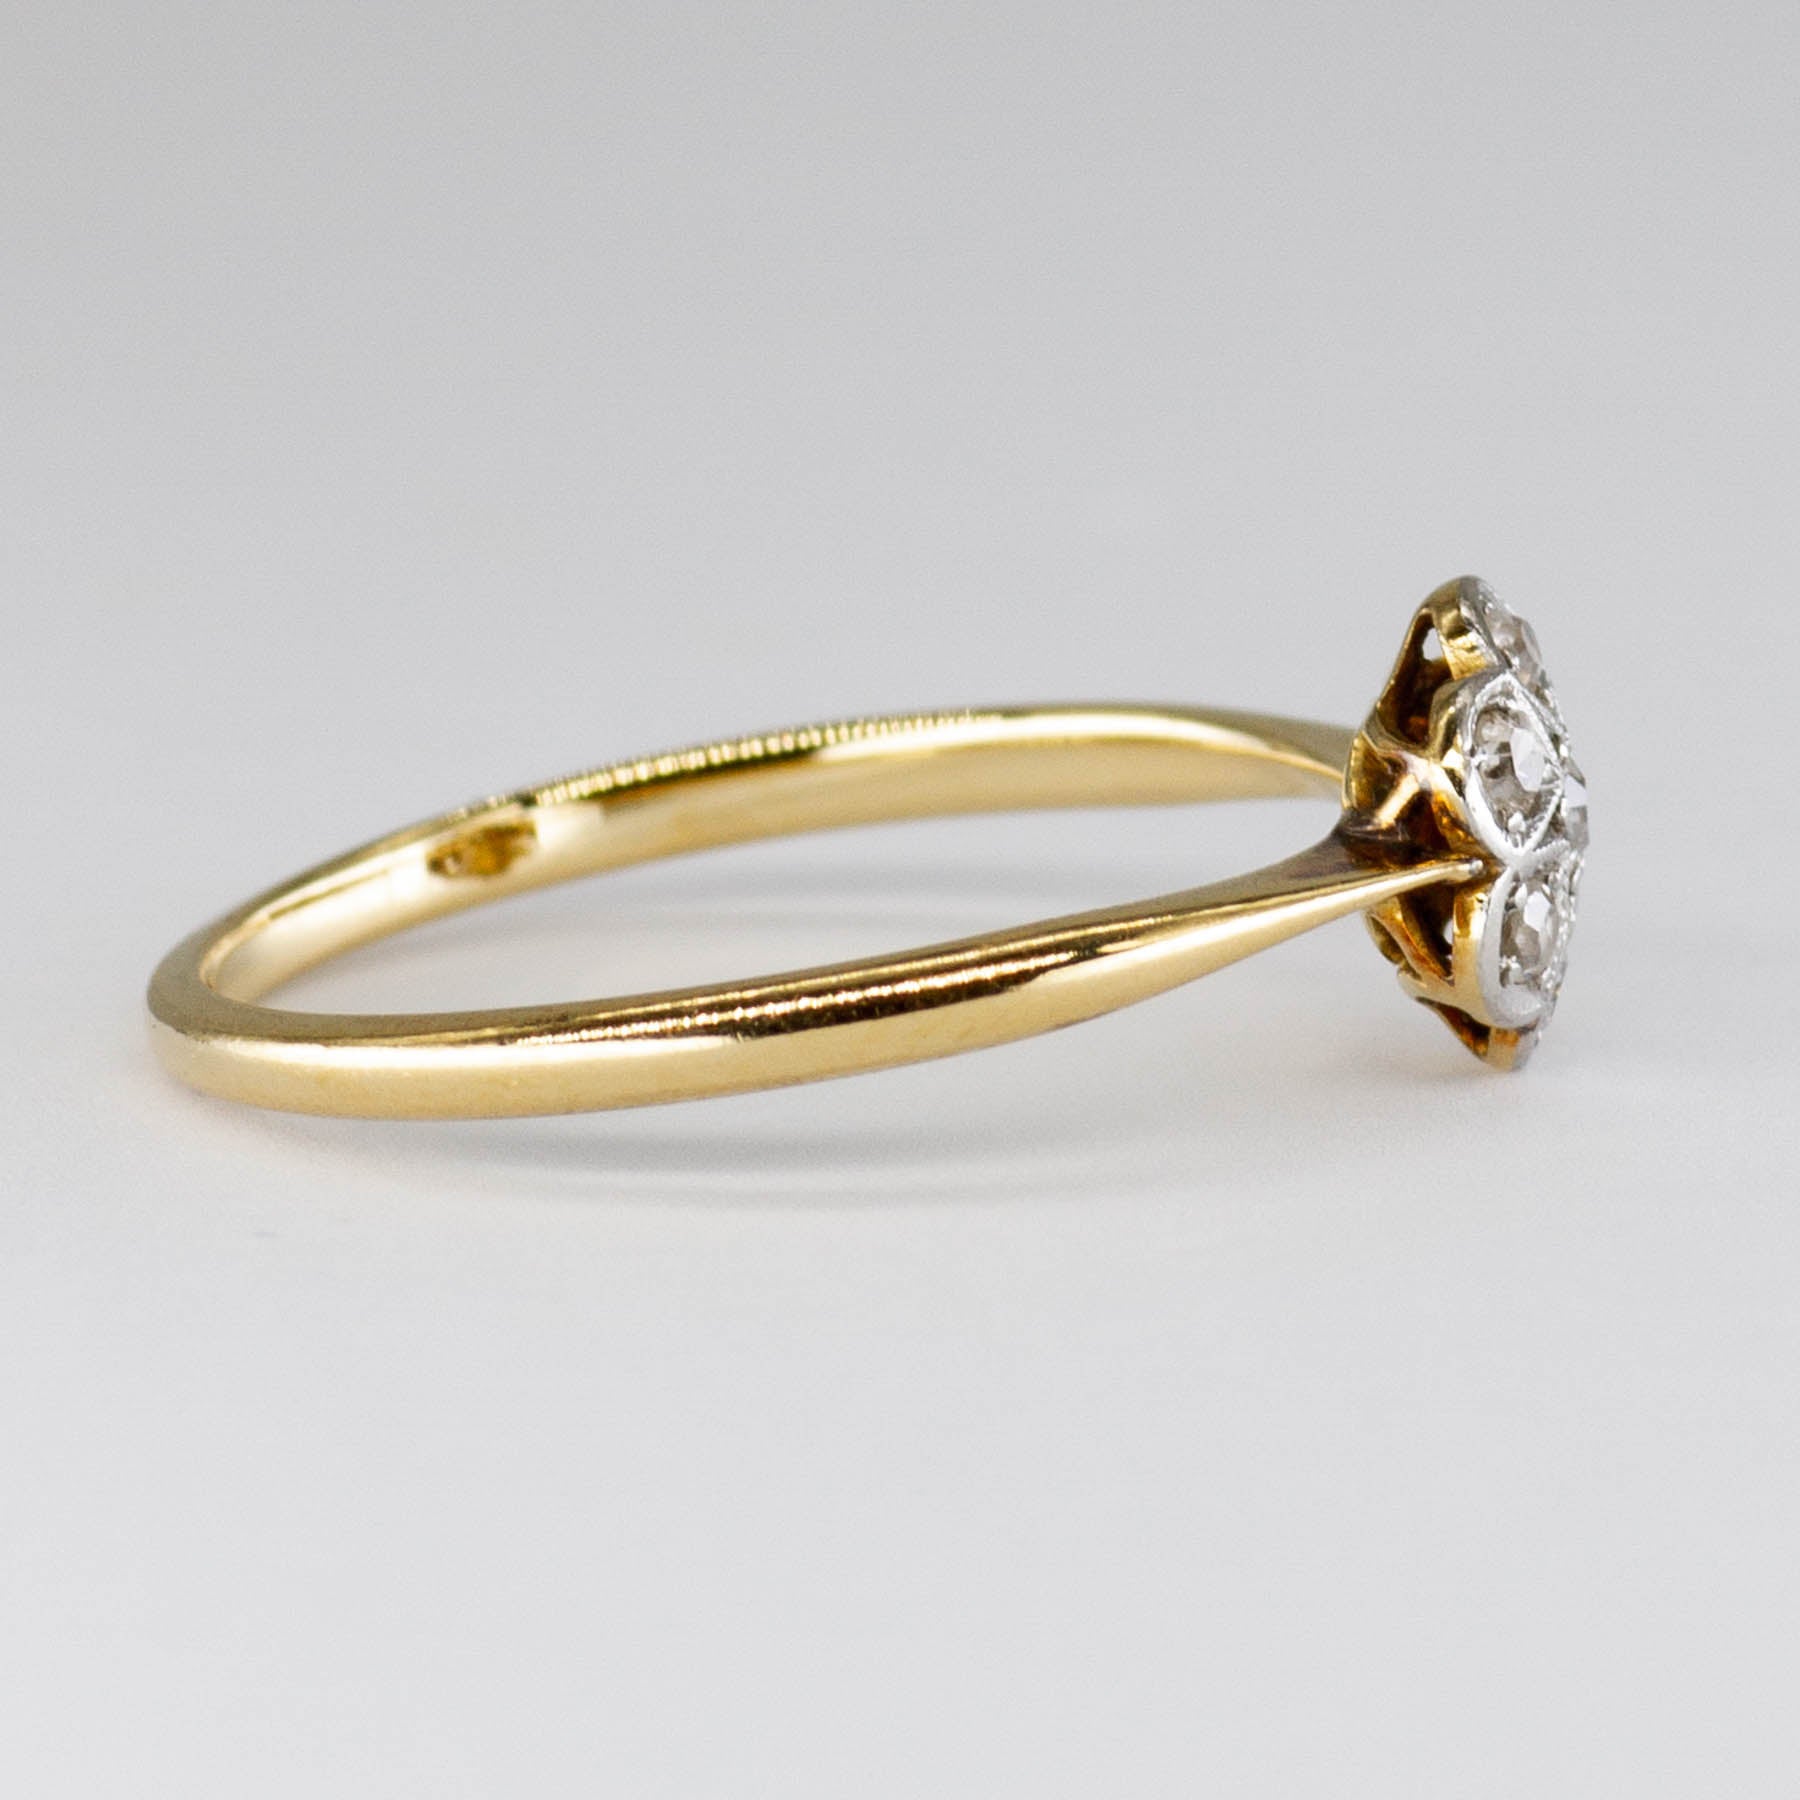 Edwardian Diamond Daisy ring in 18k and Platinum| 0.11ctw | SZ 6.25 |